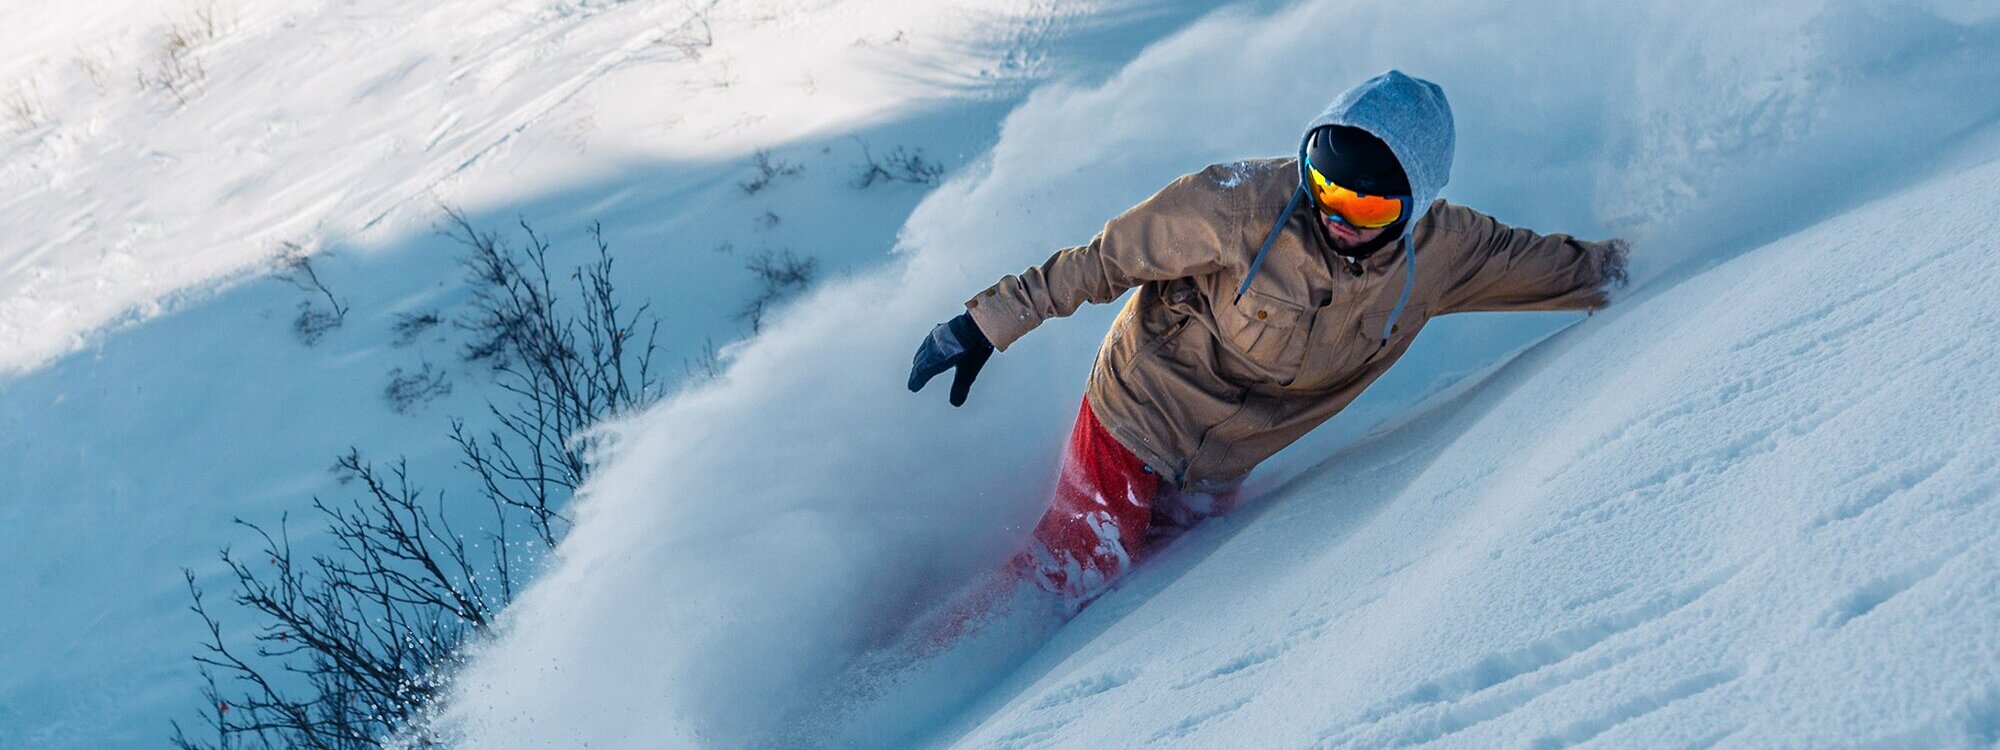 wintersport-ski-snowboard-kleding-accessoires.jpg